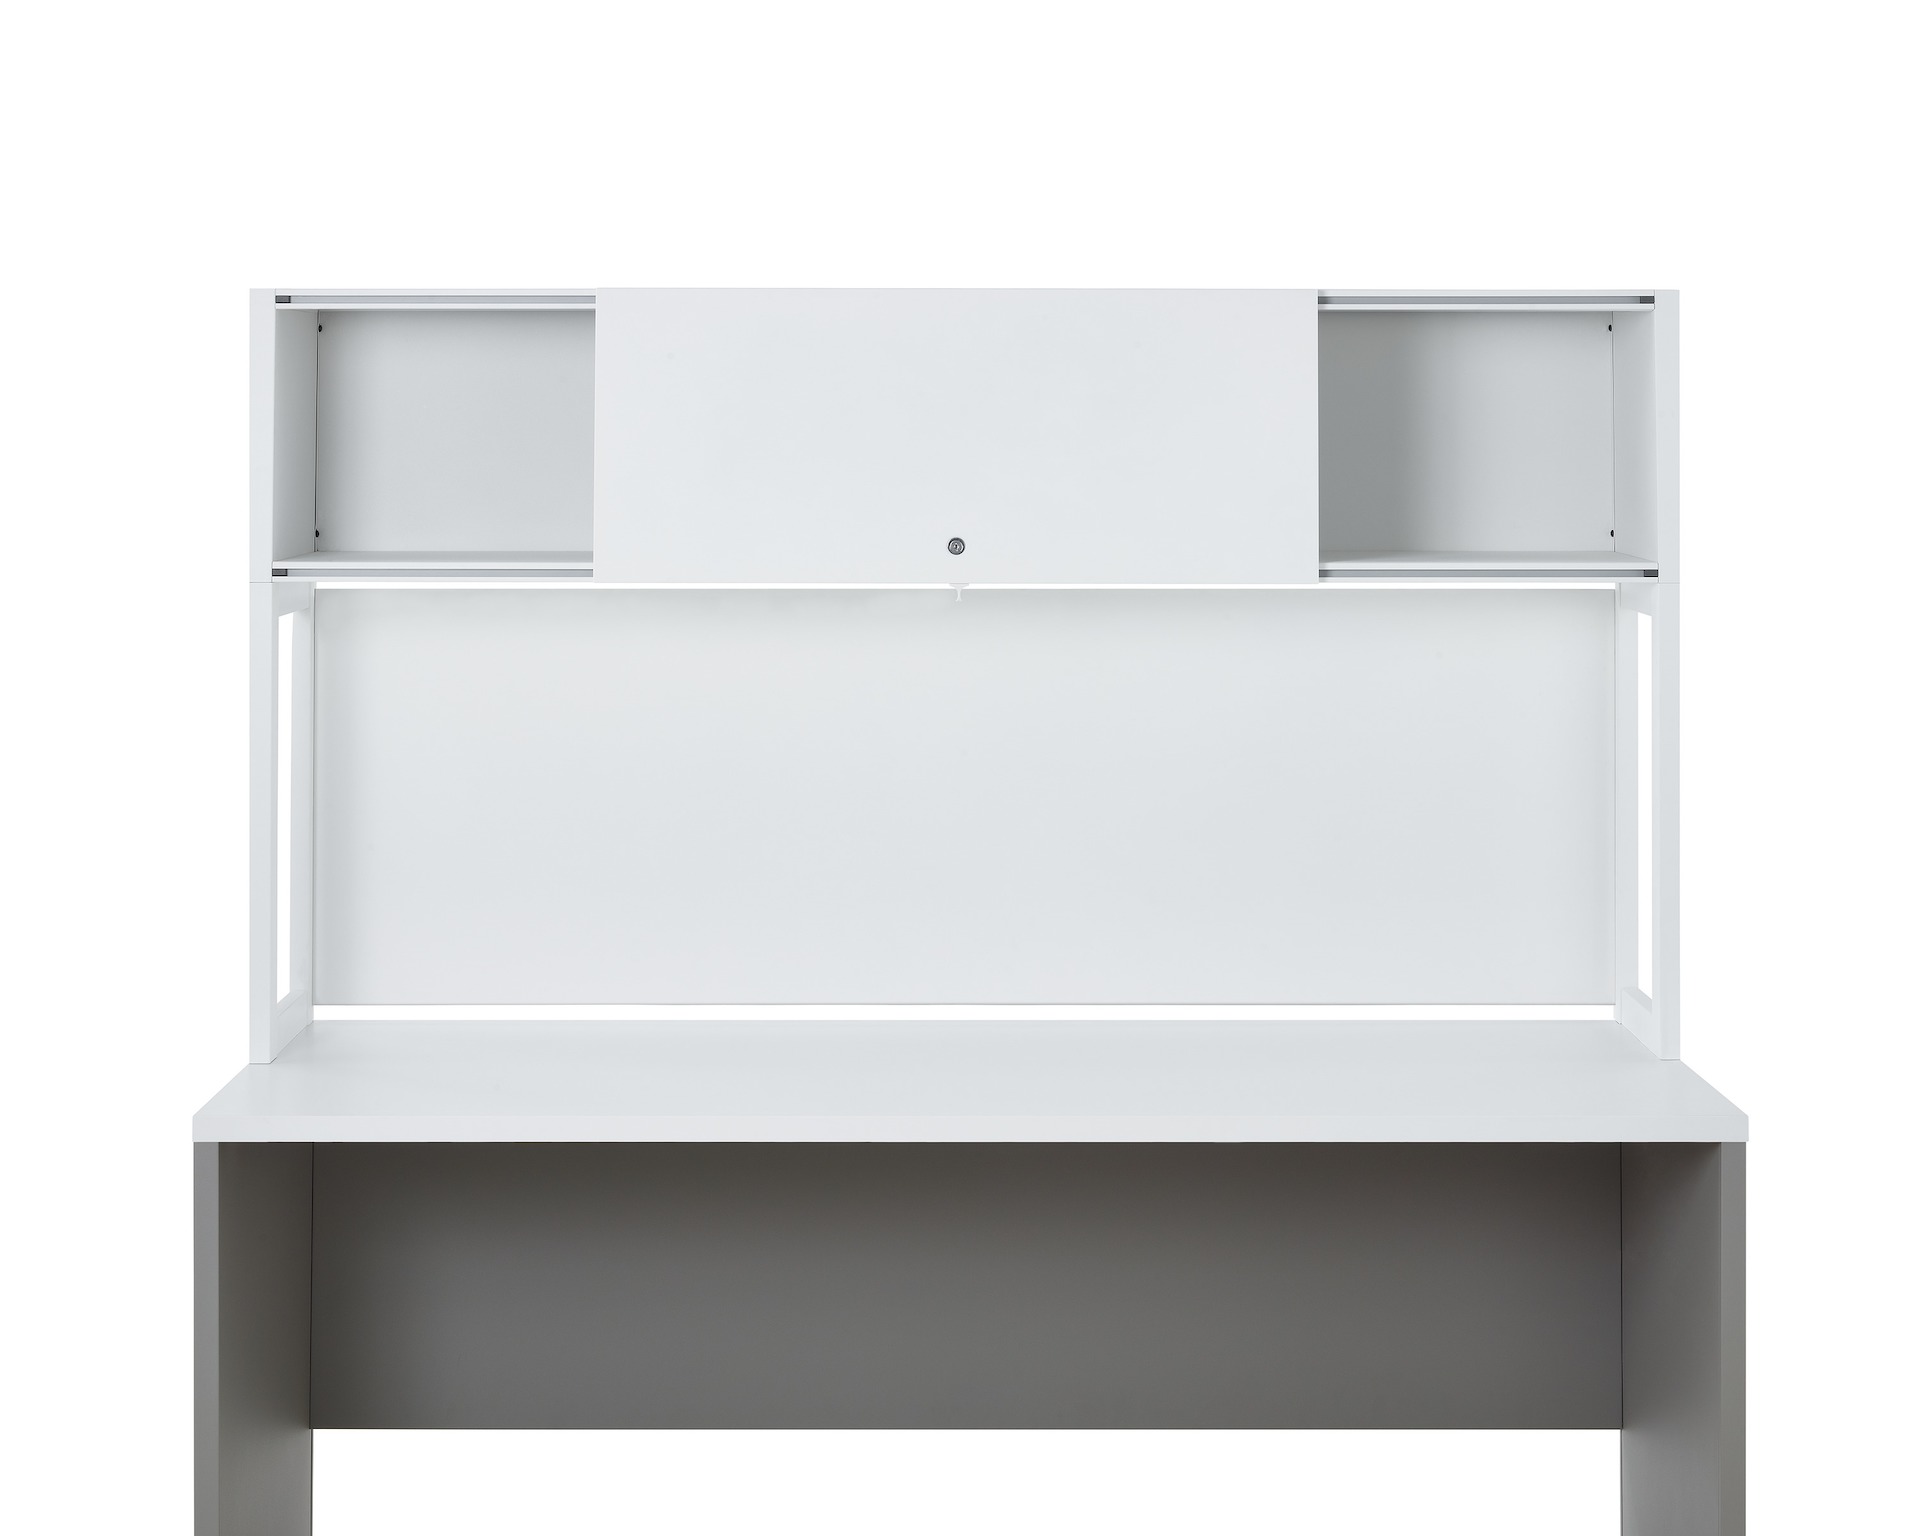 A Canvas Metal Desk with a white storage hutch.